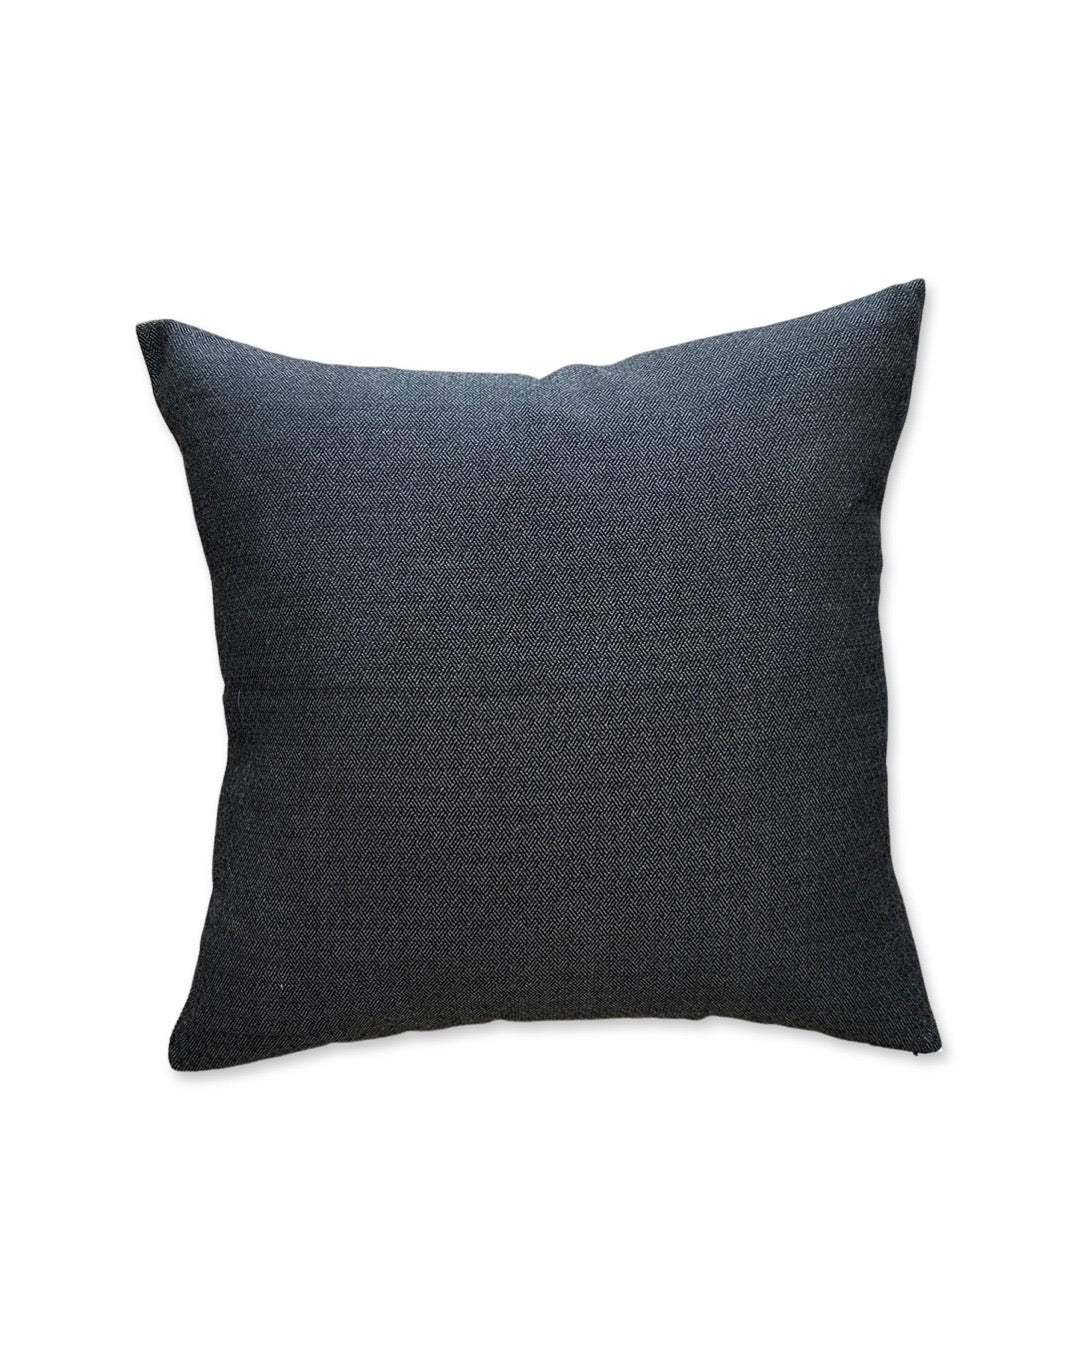 Black and Tan Basketweave Cushion